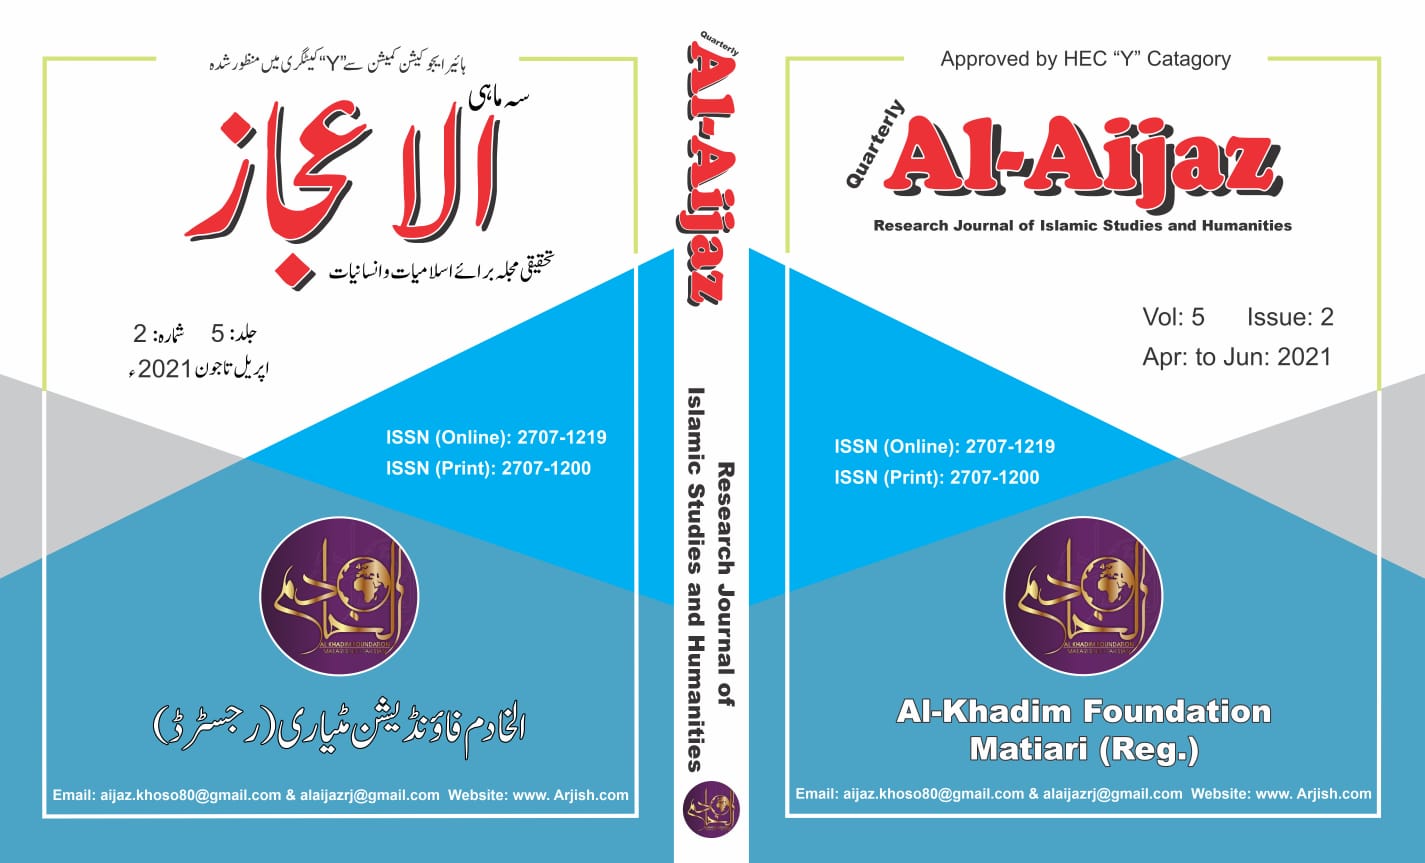 					View Vol. 5 No. 2 (2021): Al-Aijaz Research Journal of Islamic Studies & Humanities (April to June 2021)
				